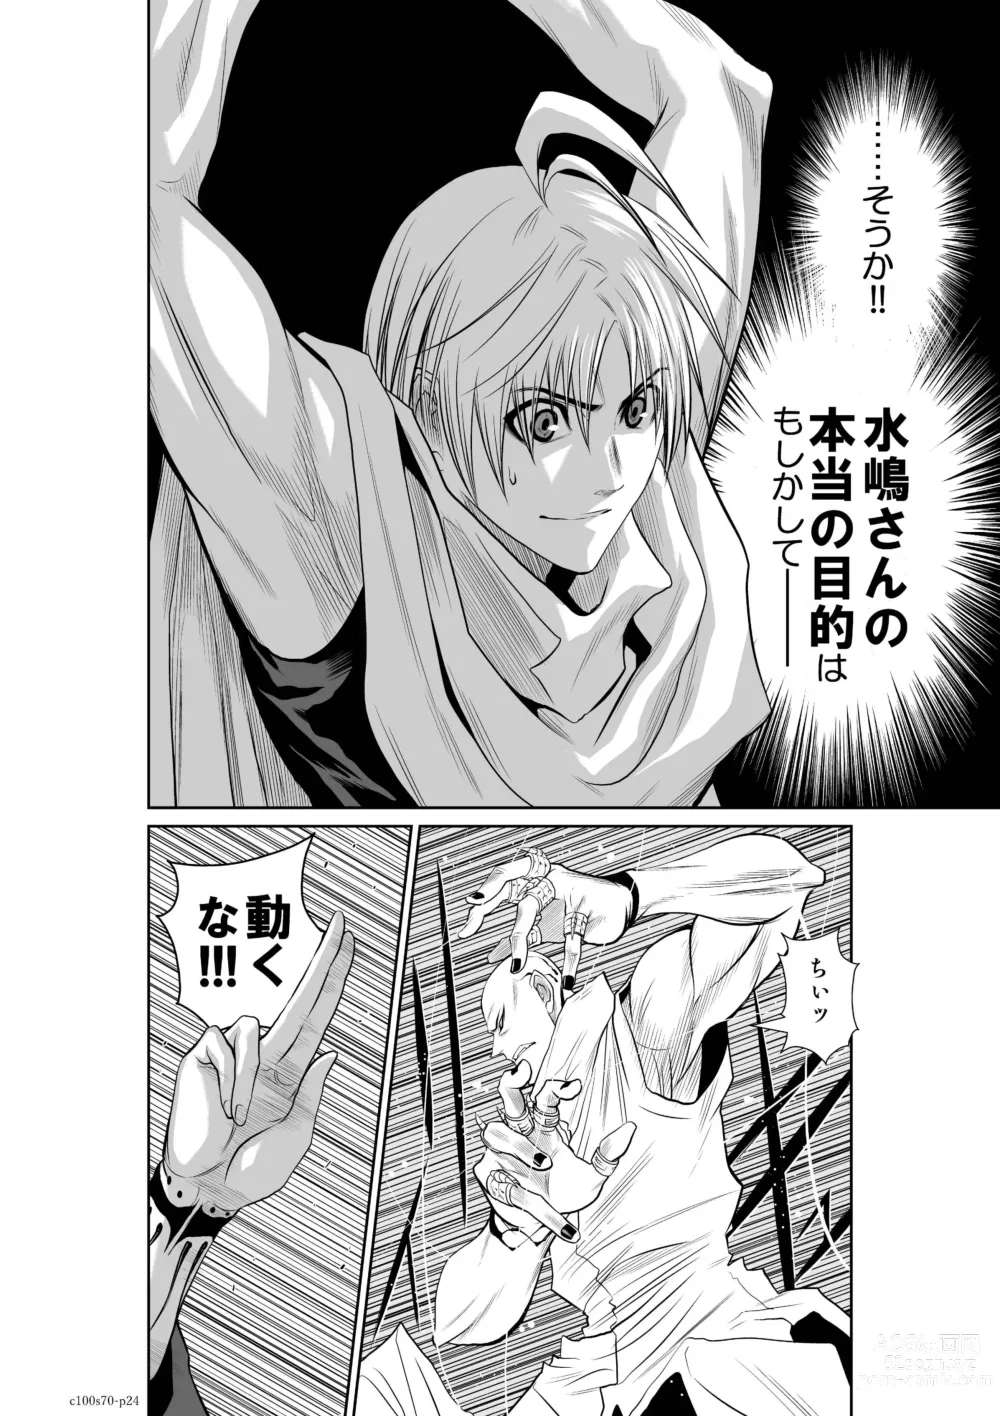 Page 541 of manga Chijou Hyakkai Ch61-70